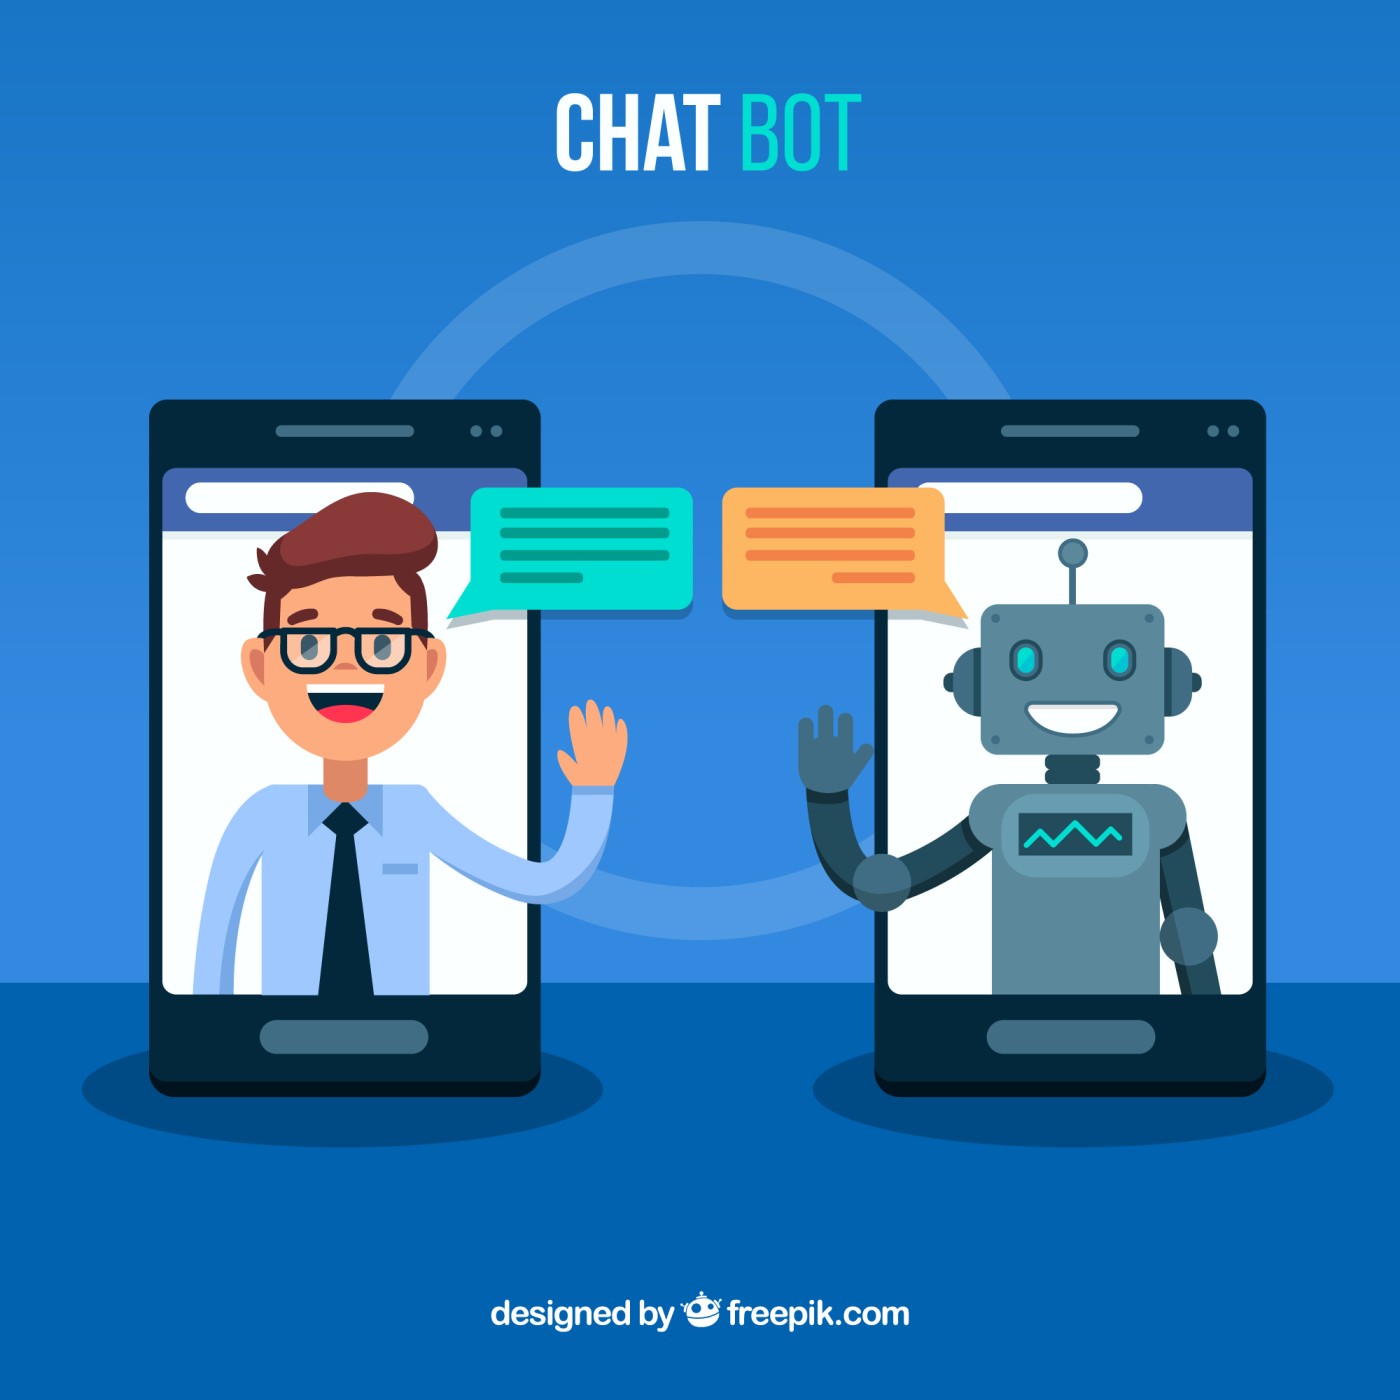 ChatGPT vs. Chatbots 1